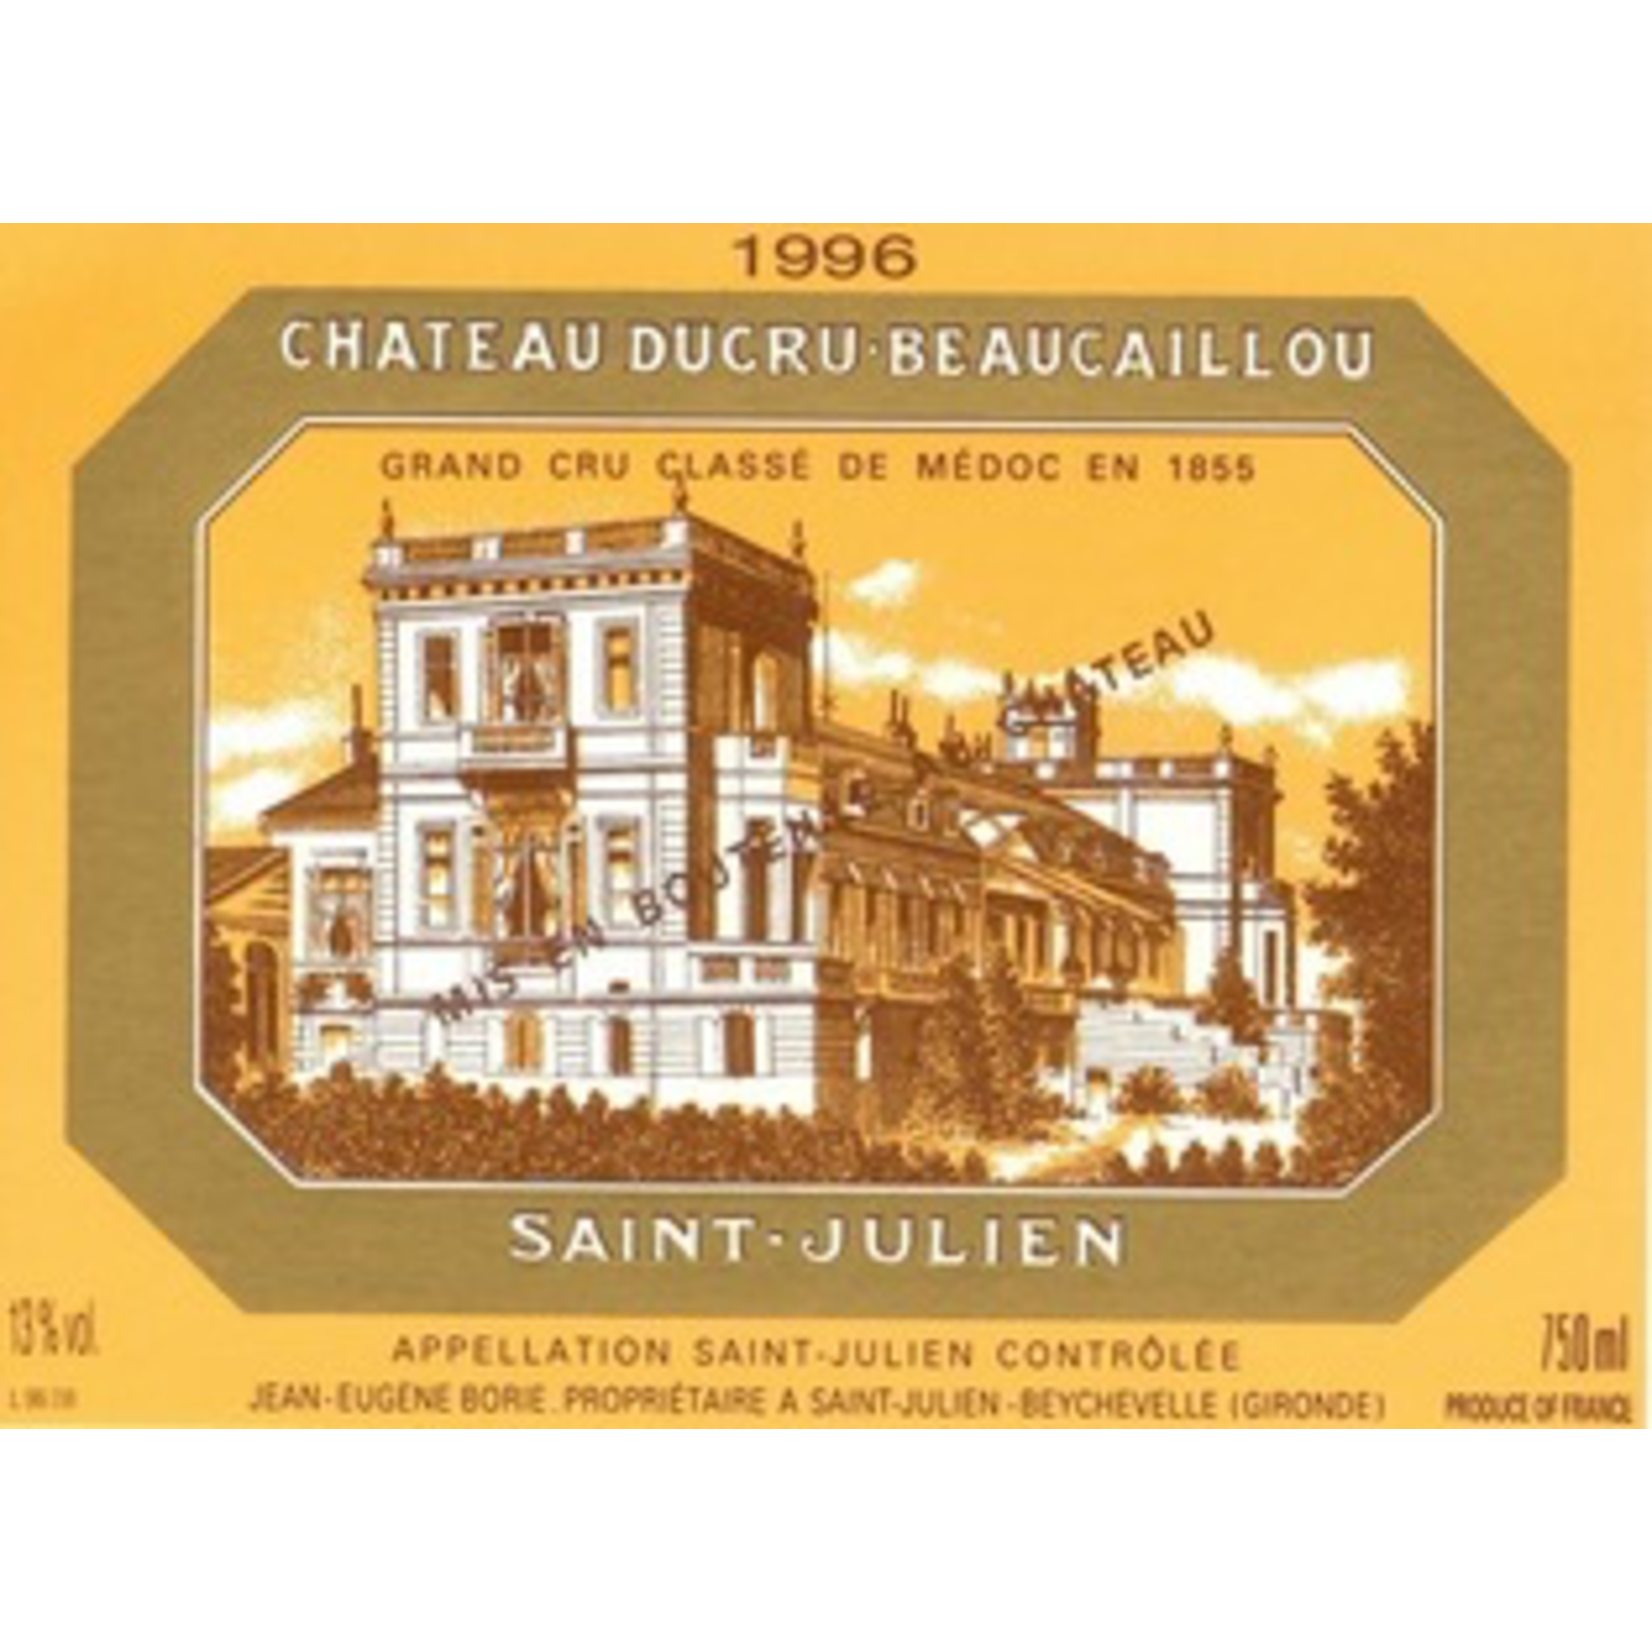 Wine Chateau Ducru Beaucaillou 1996